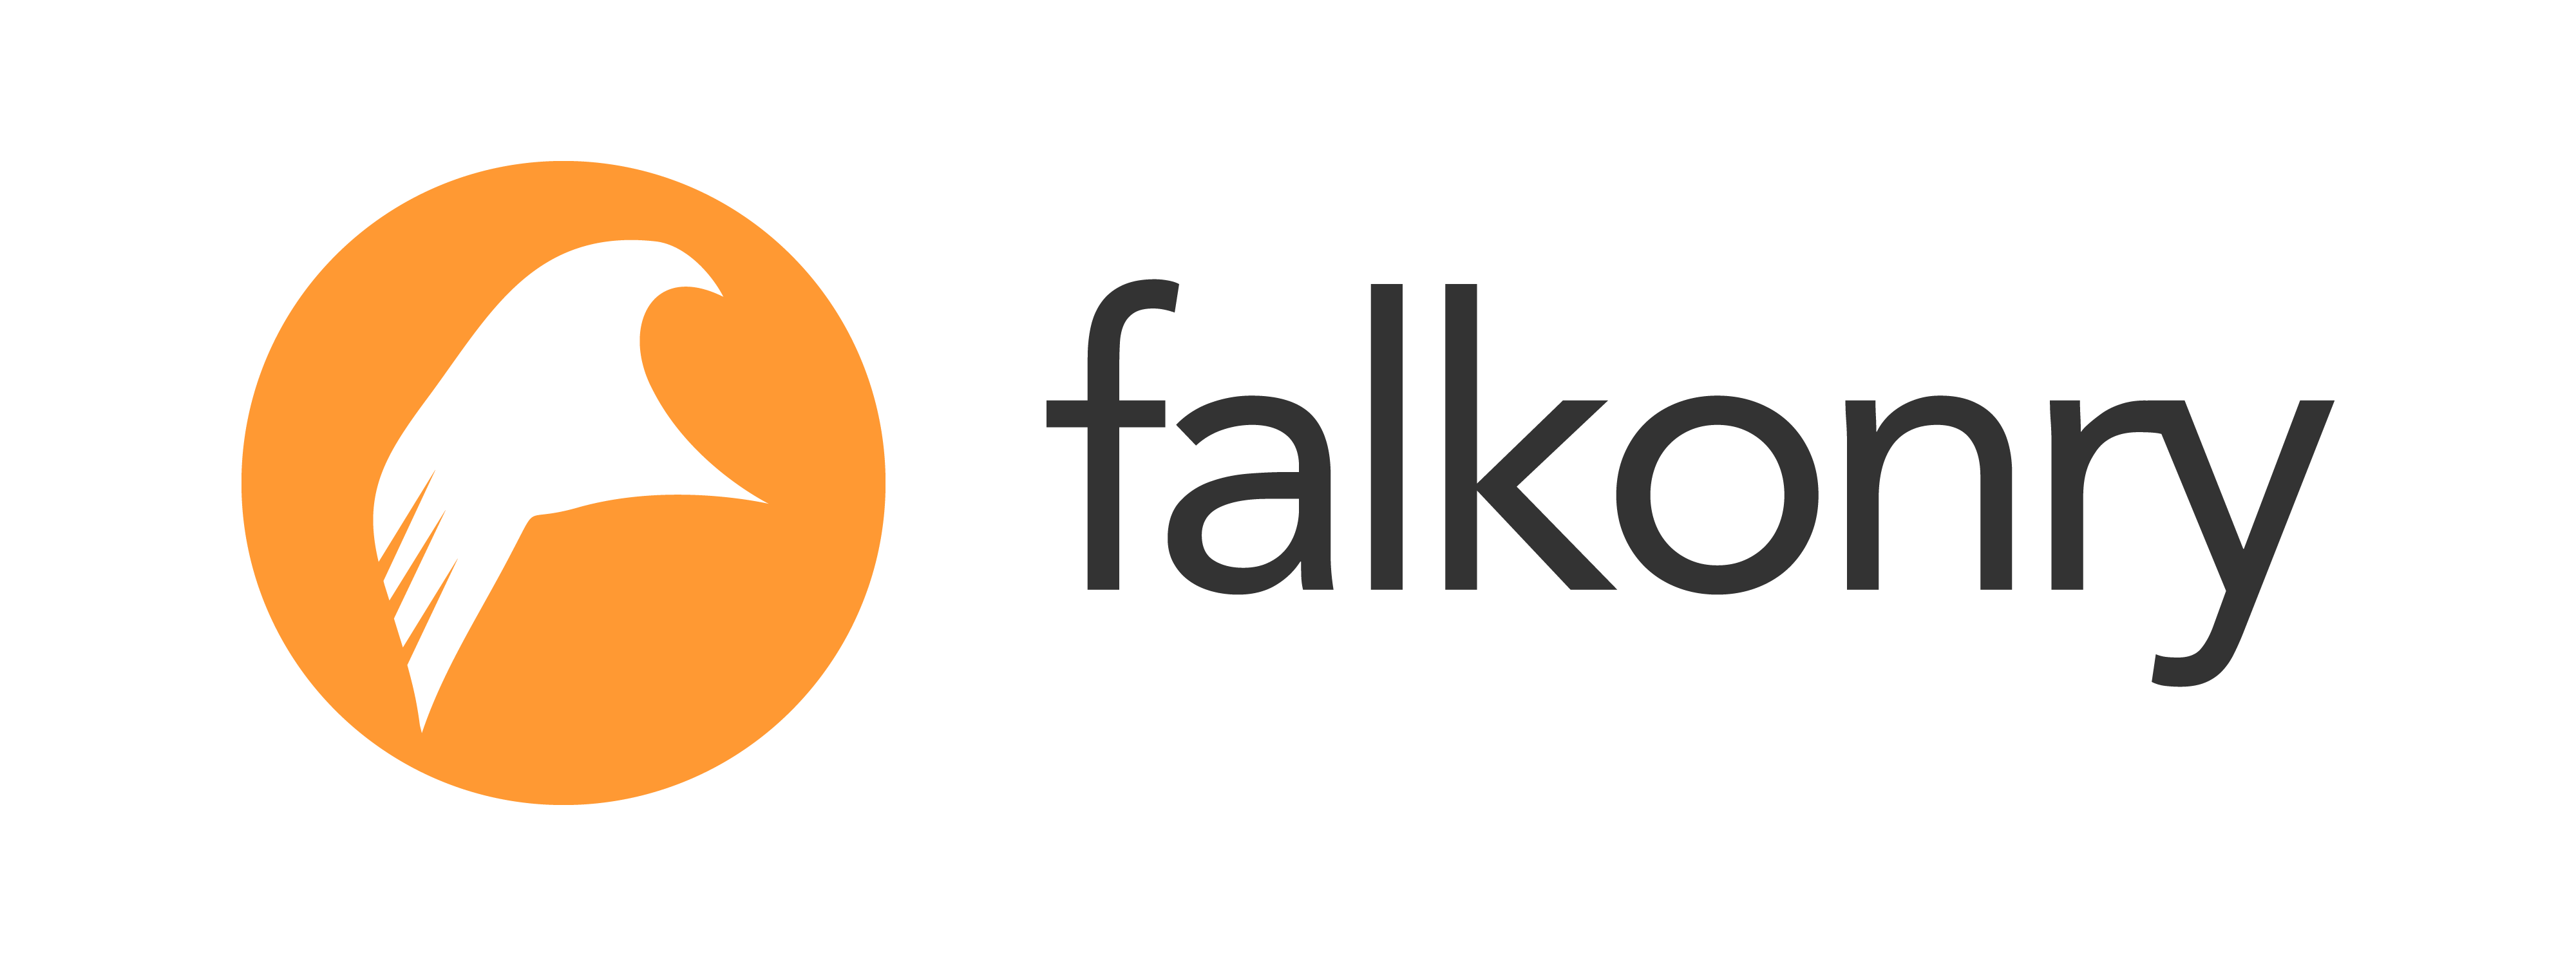 Falkonry_logo